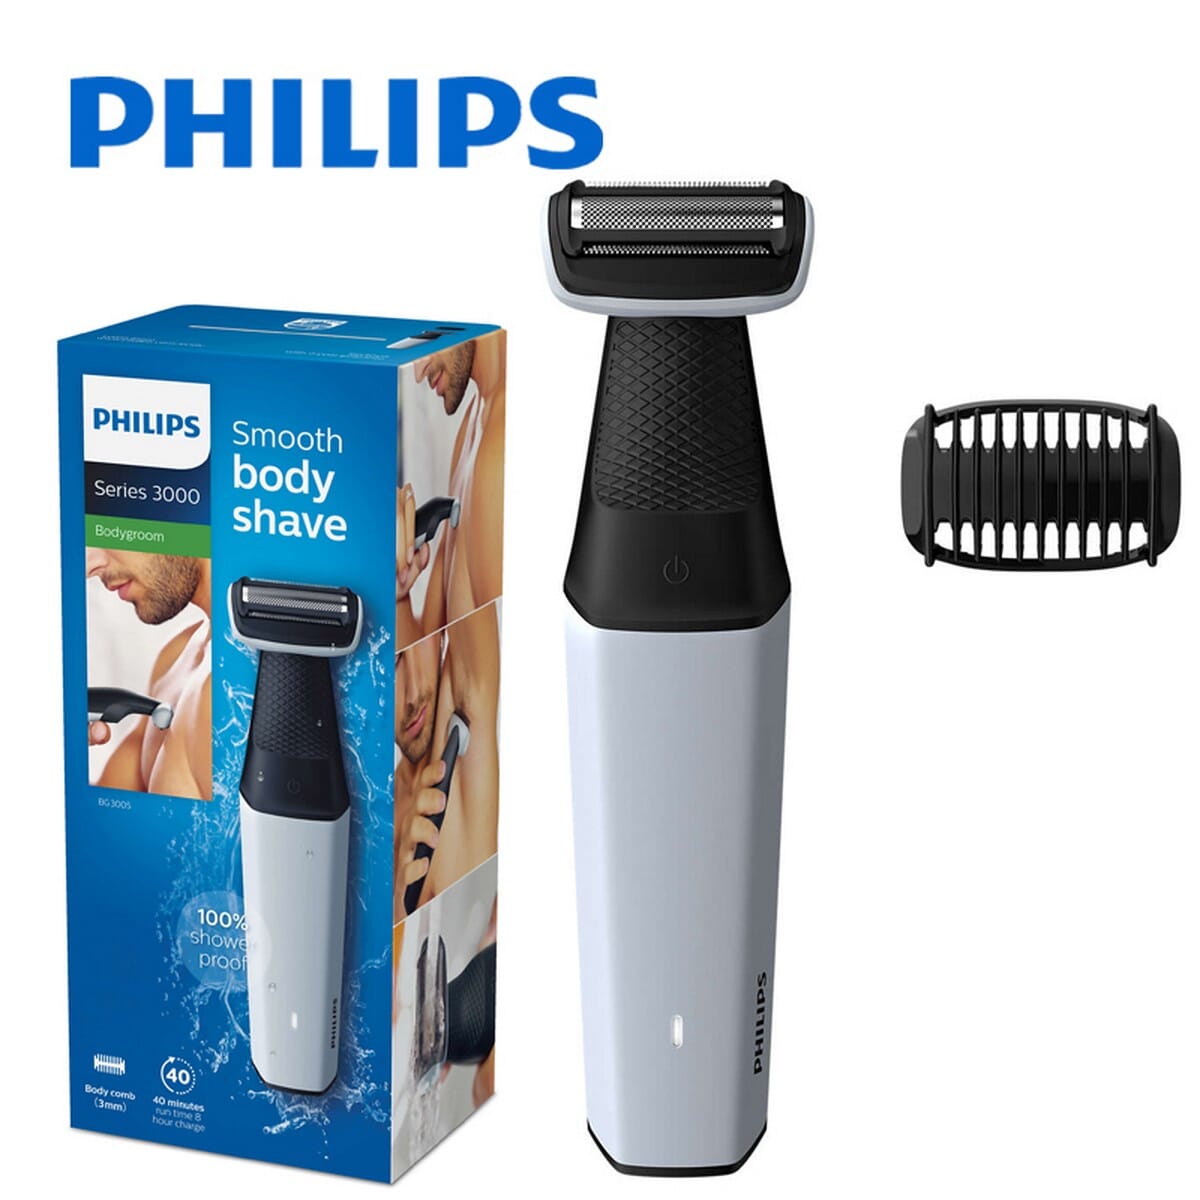 Philips series 3000 цена. Bodygroom Series 3000. Philips Bodygroom Series 3000 насадки. Philips body Groomer. Philips bg2025 Series 3000.